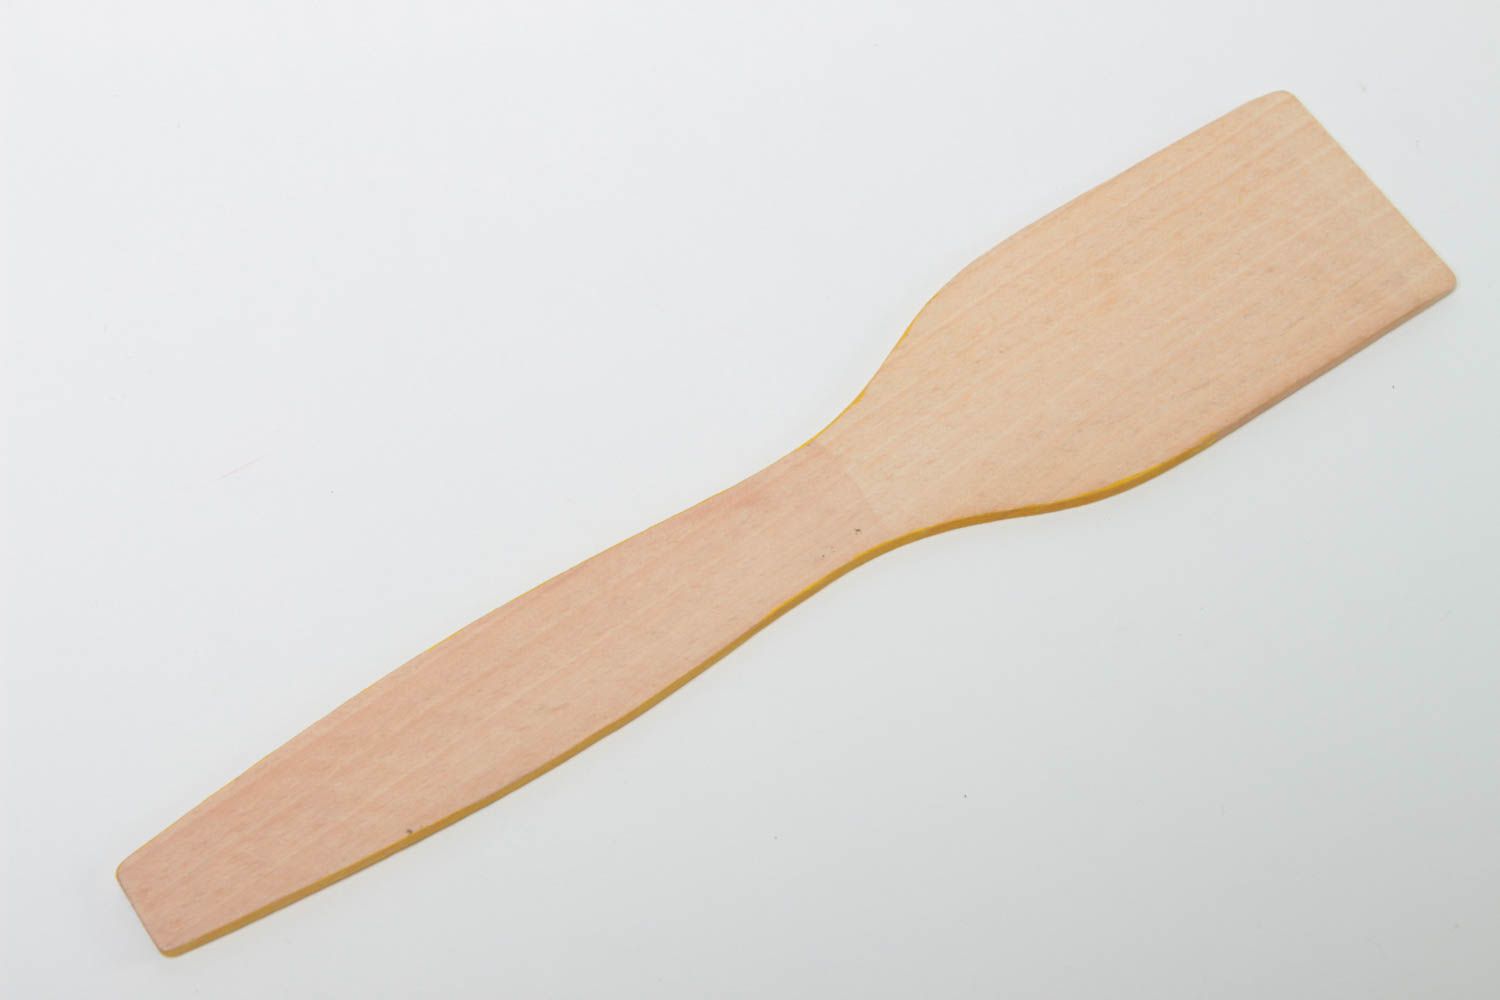 Beautiful homemade painted wooden spatula decorative kitchen utensils gift ideas photo 4